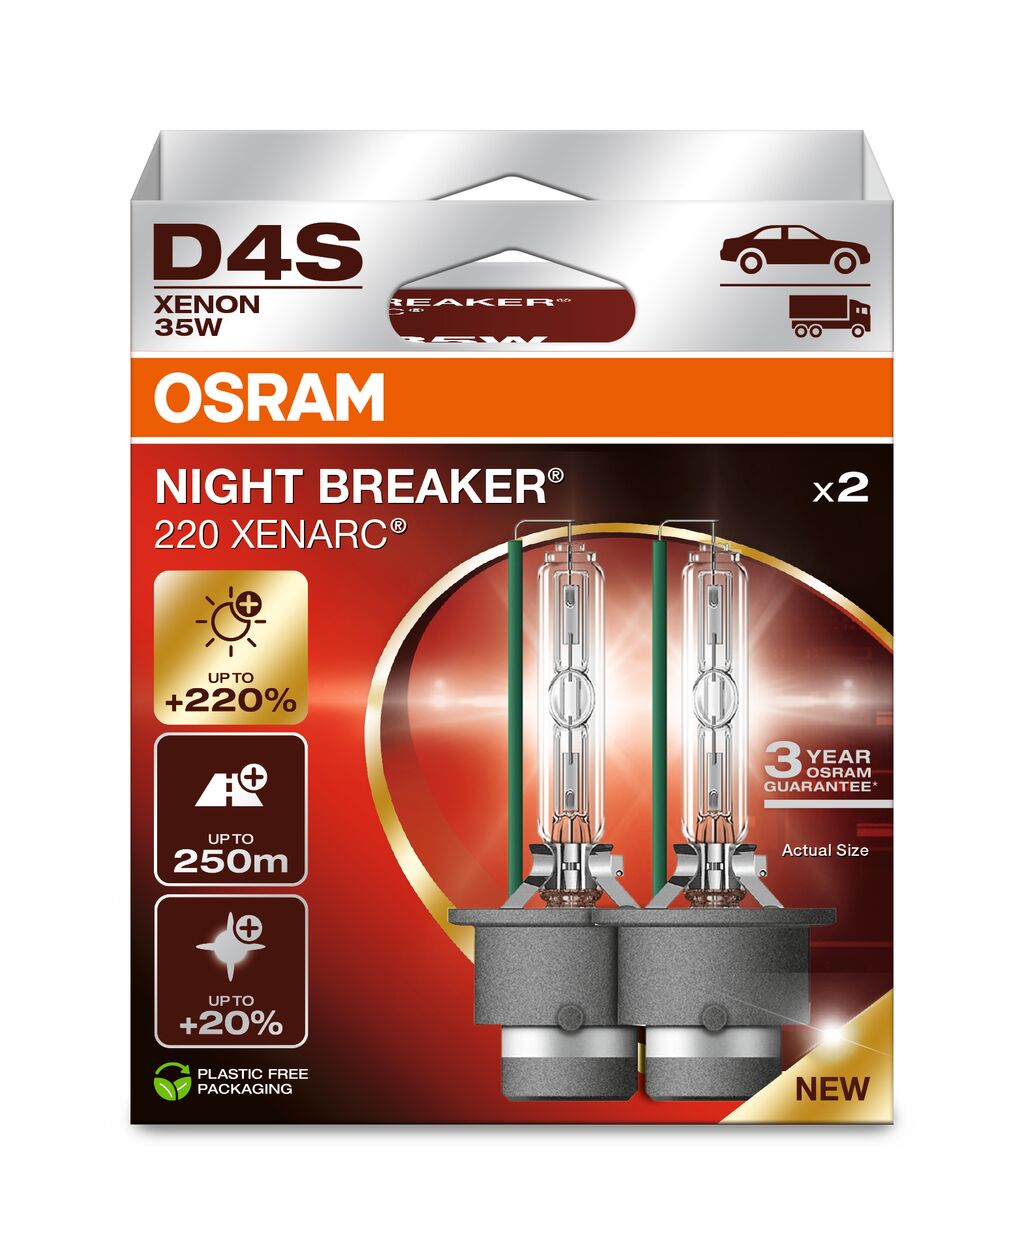 NEW 2024 Osram D4S Xenarc Night Breaker Laser next gen 66440XN2 xenon HID bulbs